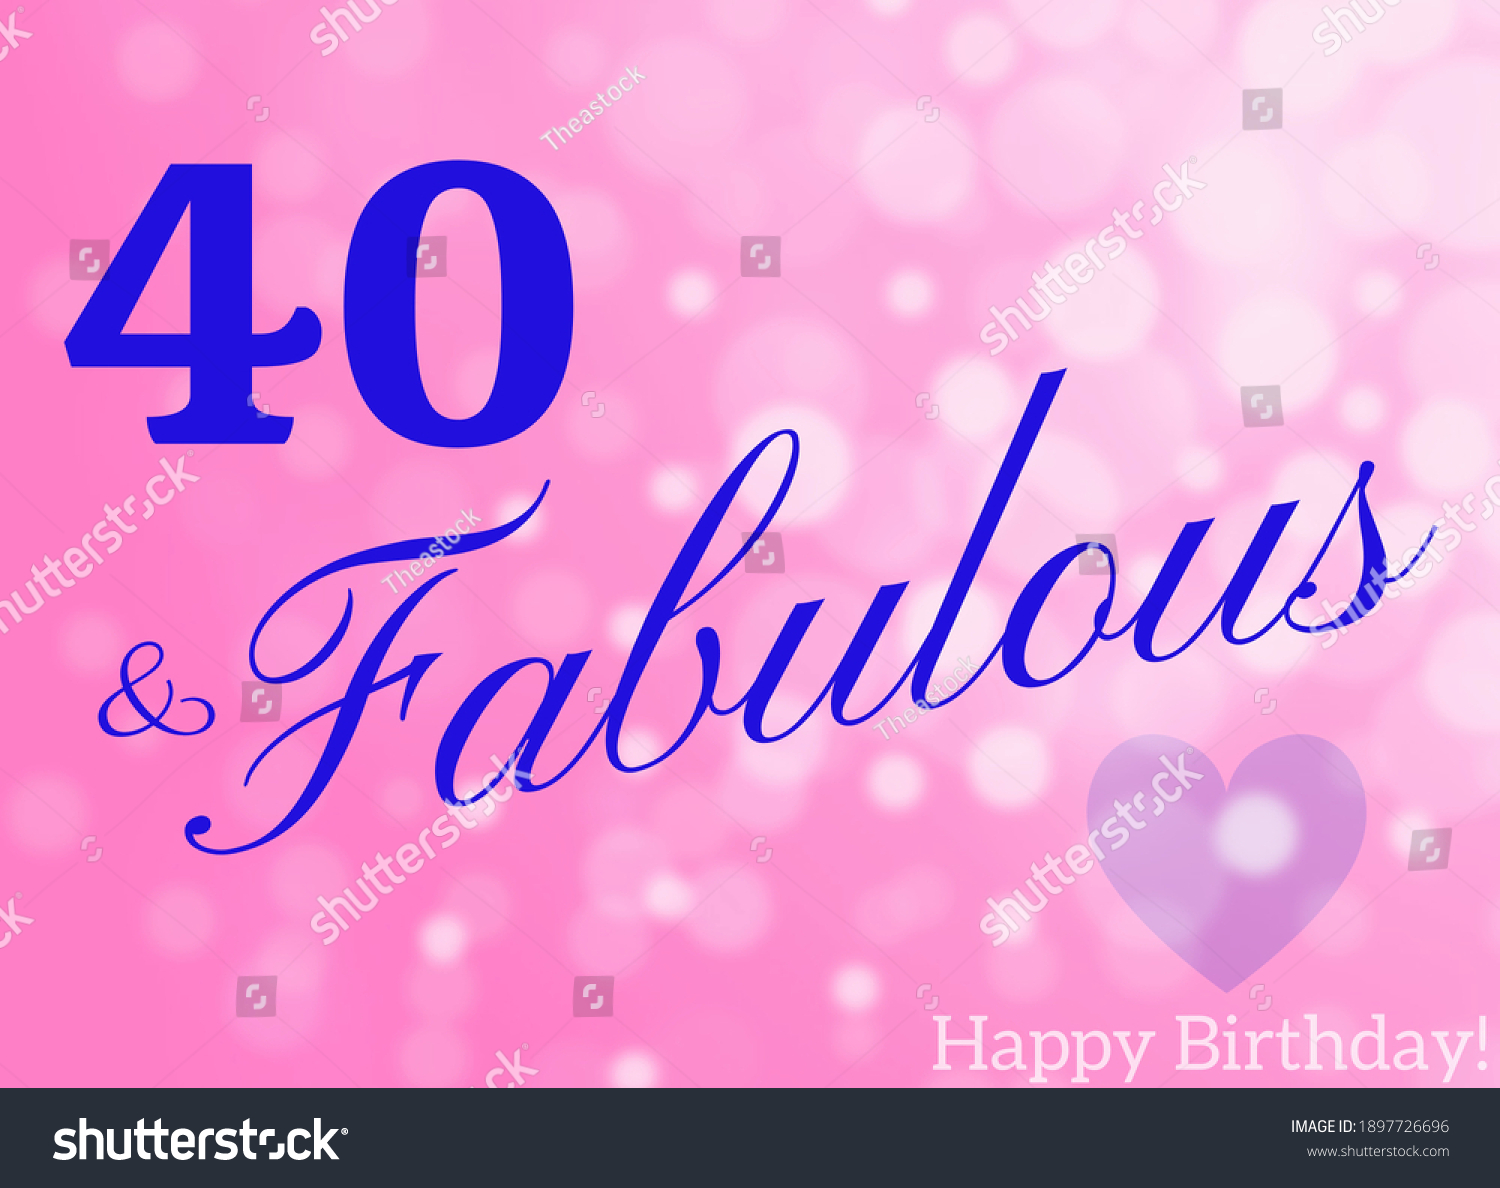 40th-birthday-card-wishes-illustration-stock-illustration-1897726696